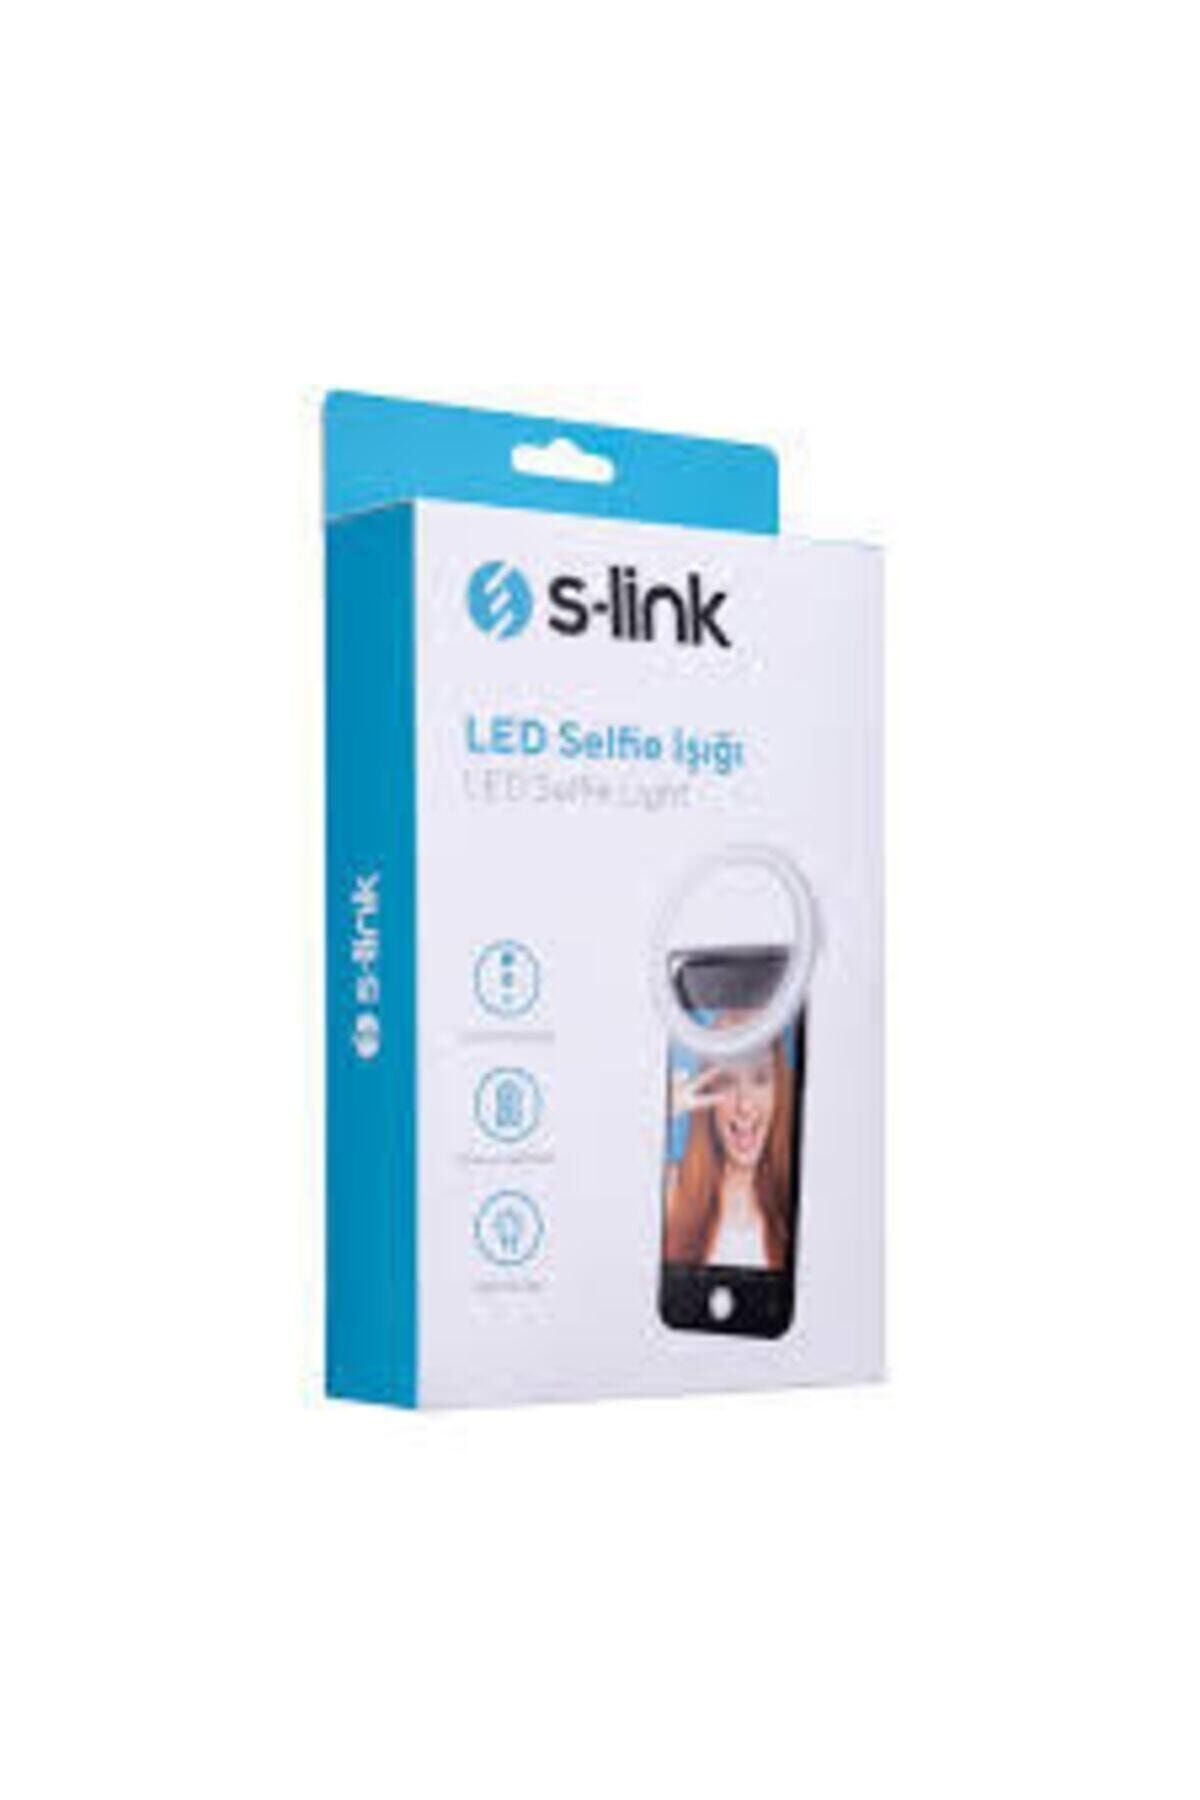 S-Link Cep Tel Led Selfi Işıgı